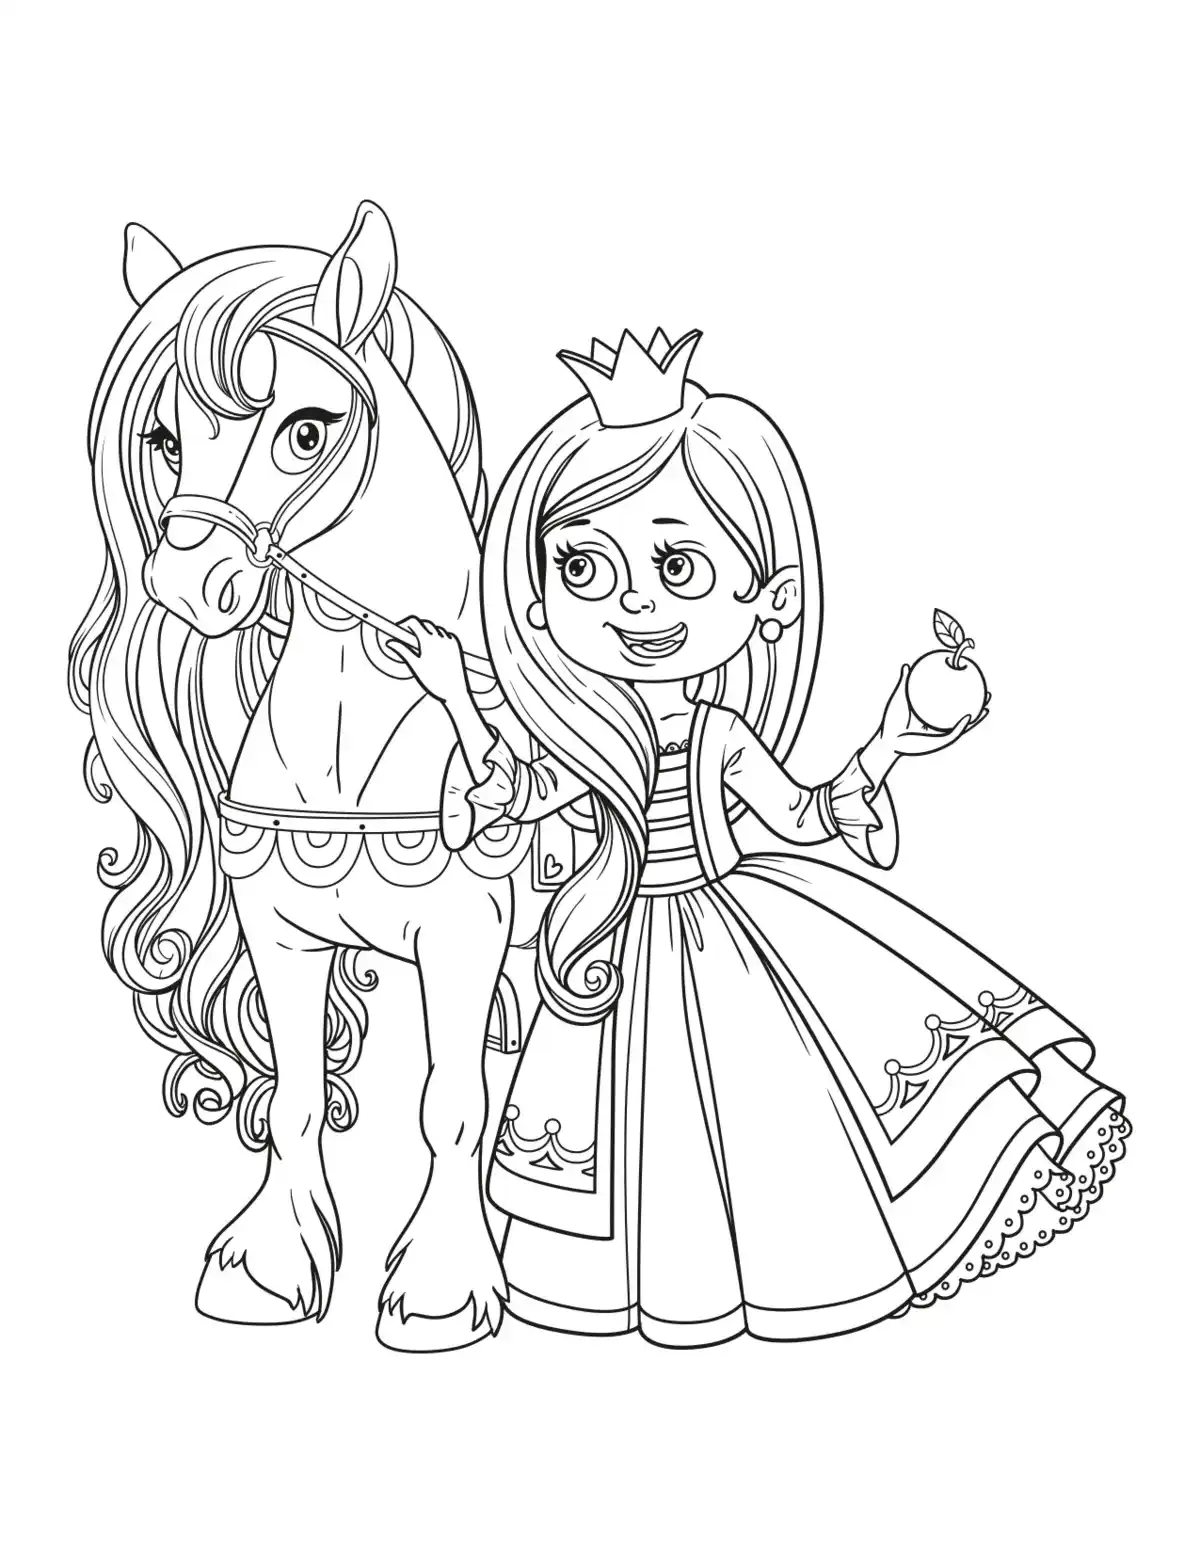 Free Download Coloring PDF, Princess Princess Feeding Horse Apple Coloring Pages Pdf